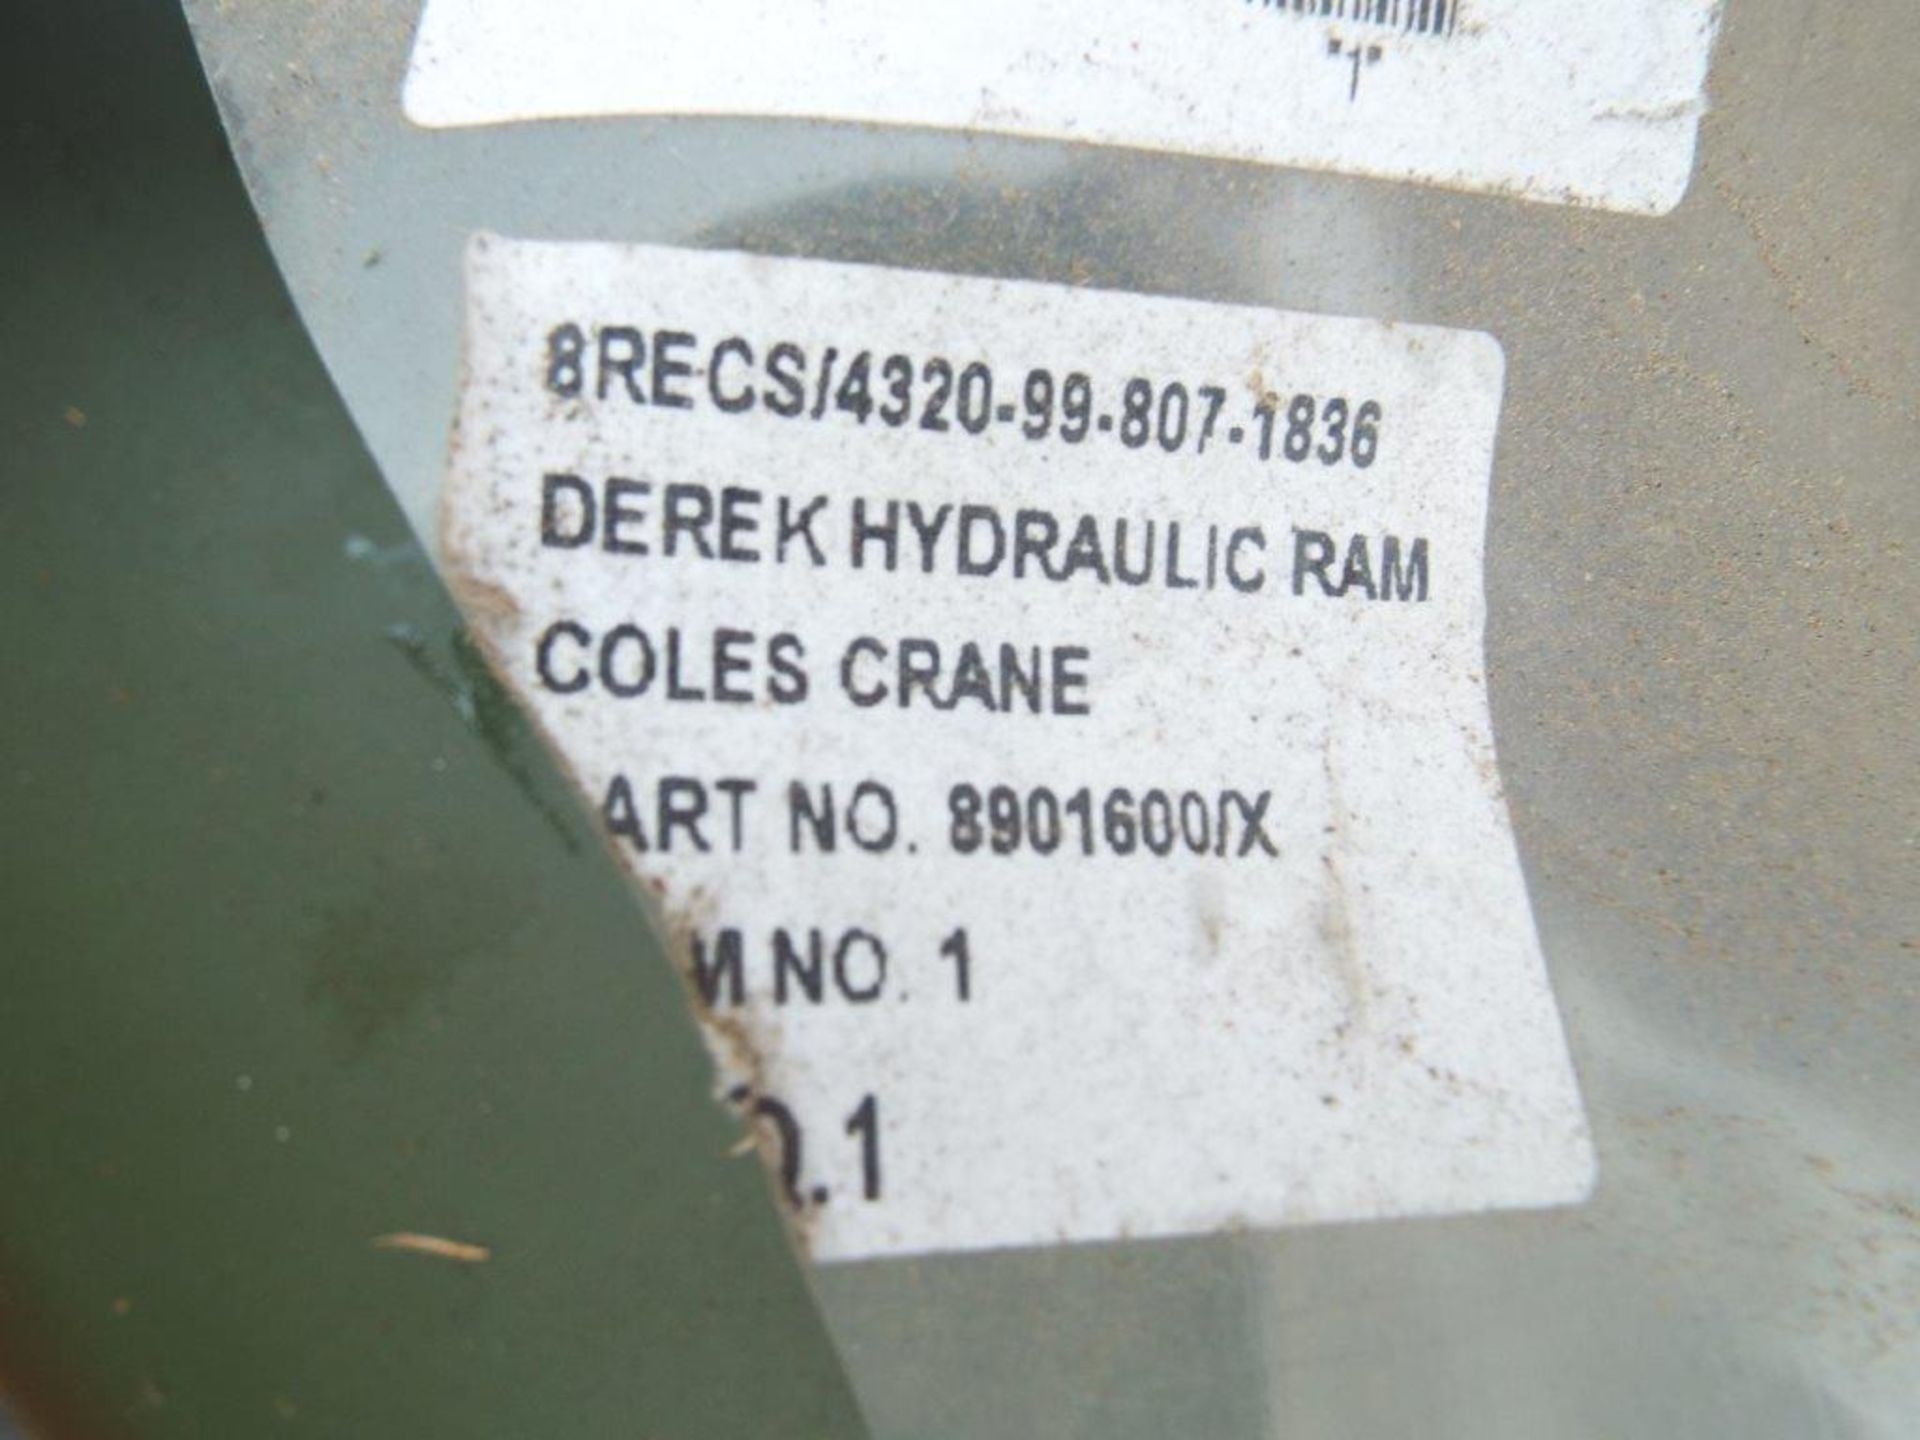 2 x Reconditioned Heavy Duty Derek Hydraulic Rams for Coles Crane P/No 8901600/X - Image 5 of 6